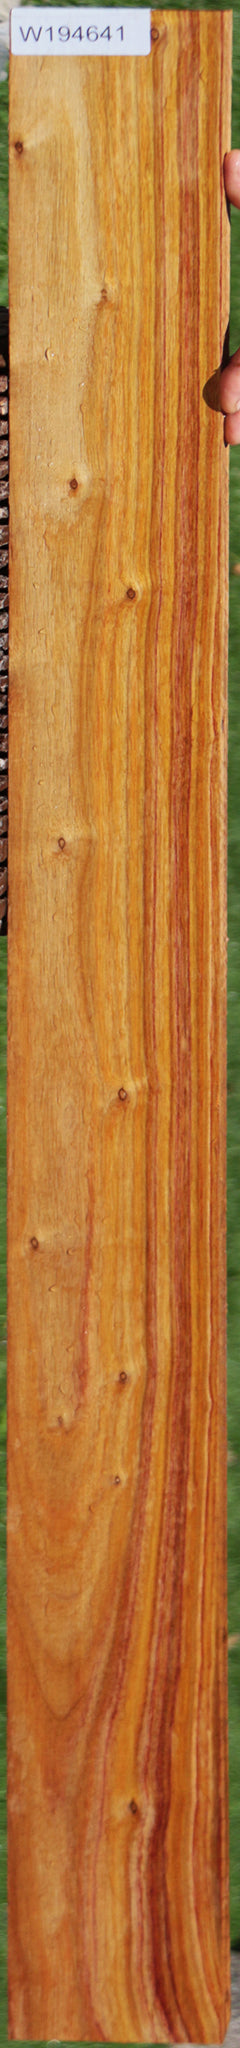 Canary Lumber